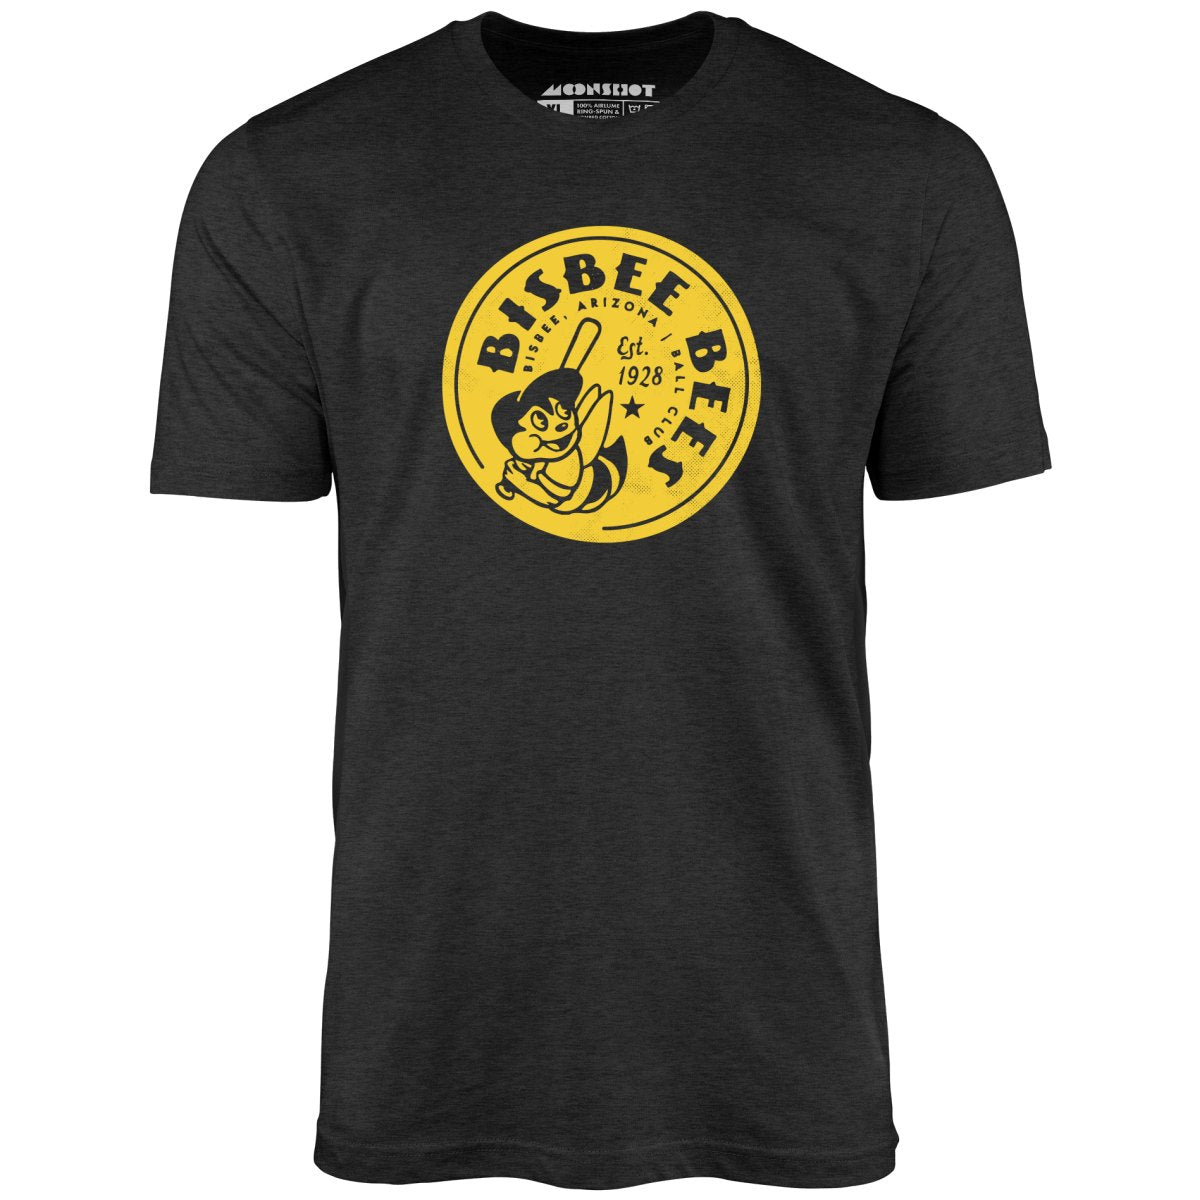 Bisbee Bees - Arizona - Vintage Defunct Baseball Teams - Unisex T-Shirt